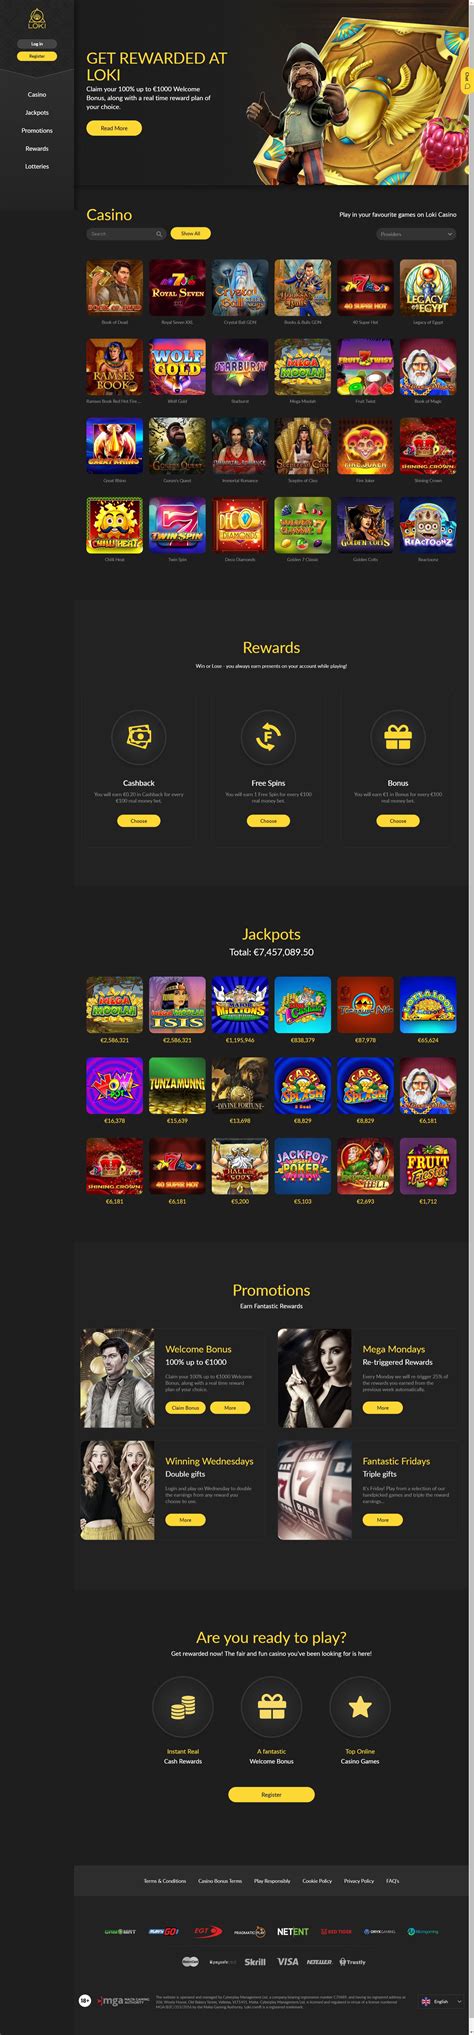 loki casino askgamblers Online Casino Spiele kostenlos spielen in 2023